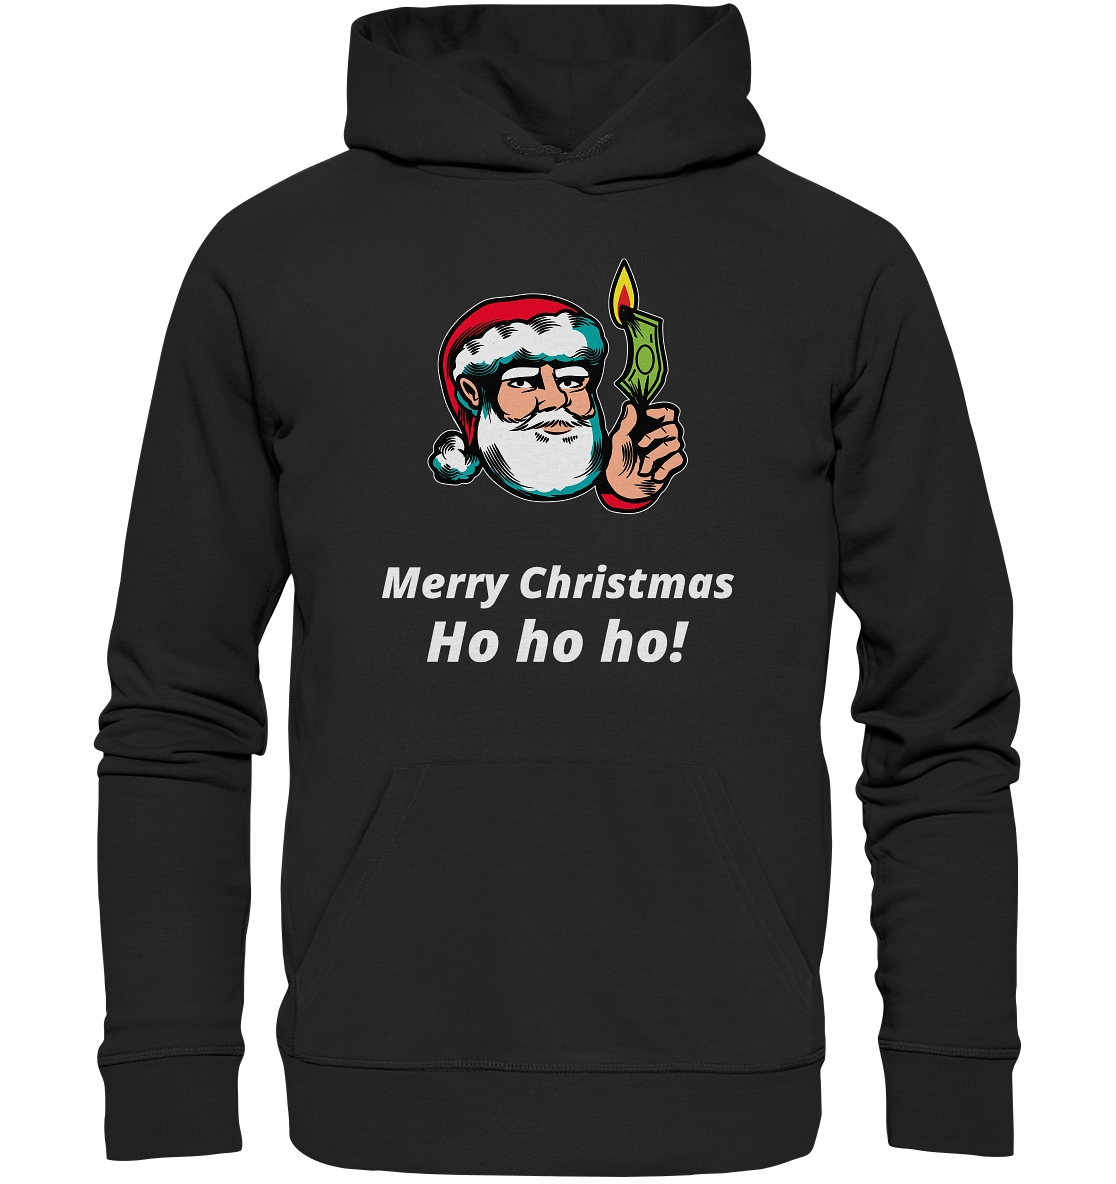 Merry-Christmas-Ho-ho-ho-Xmas-unisex-Pullover-fuer-Erwachsene-schwarz